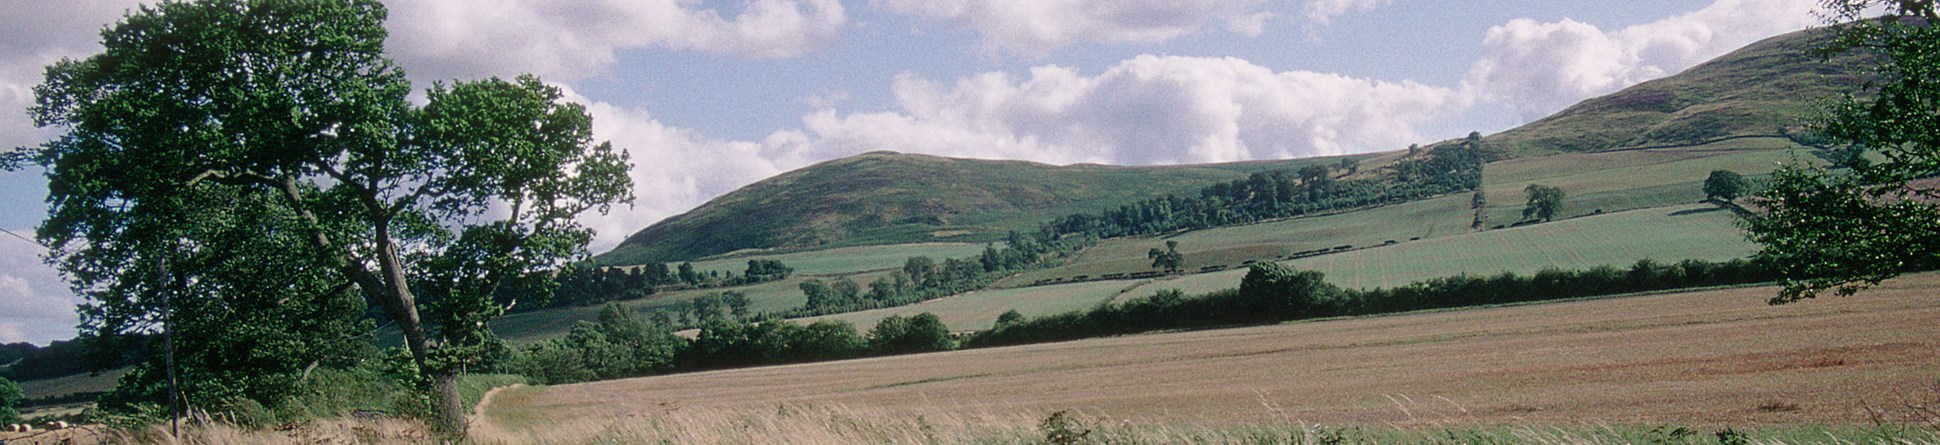 The battlefield of Homildon Hill, Northumberland